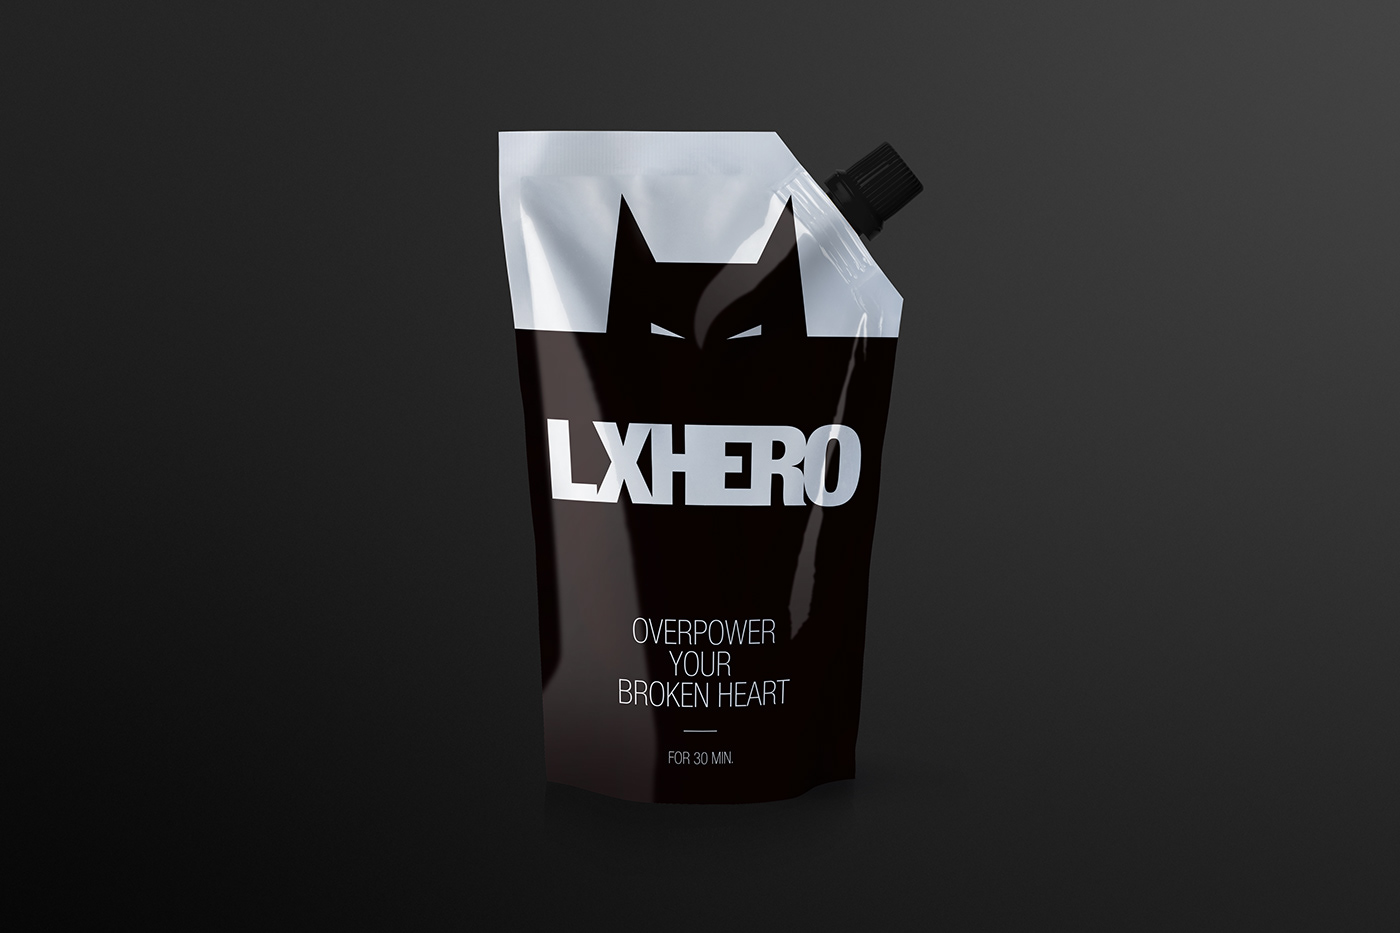 Adobe Portfolio lxhero SuperHero wonderwoman batman wolverine Hulk energy drink drink elixir vania nedkova vnedkova elisava ELISAVA PACK superhero drink pentawards